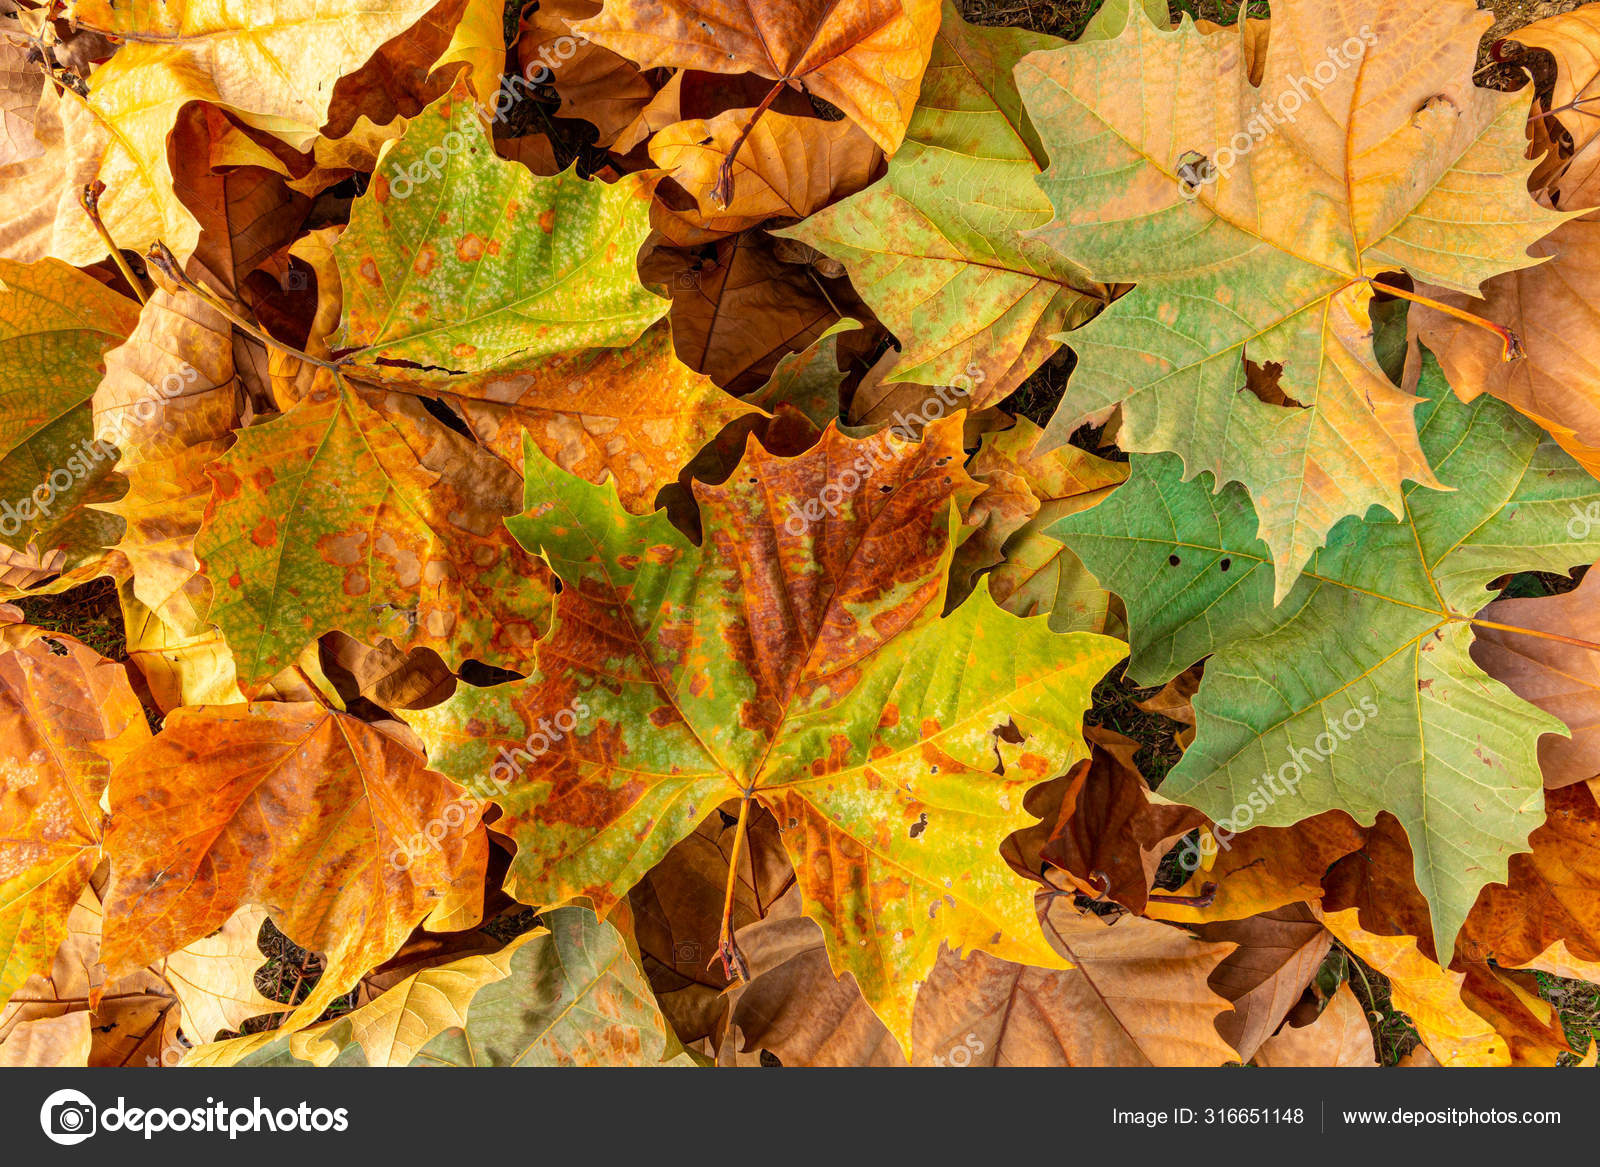 Autumn Maple Leaves Background — Free Stock Photo © spaceneospace #316651148